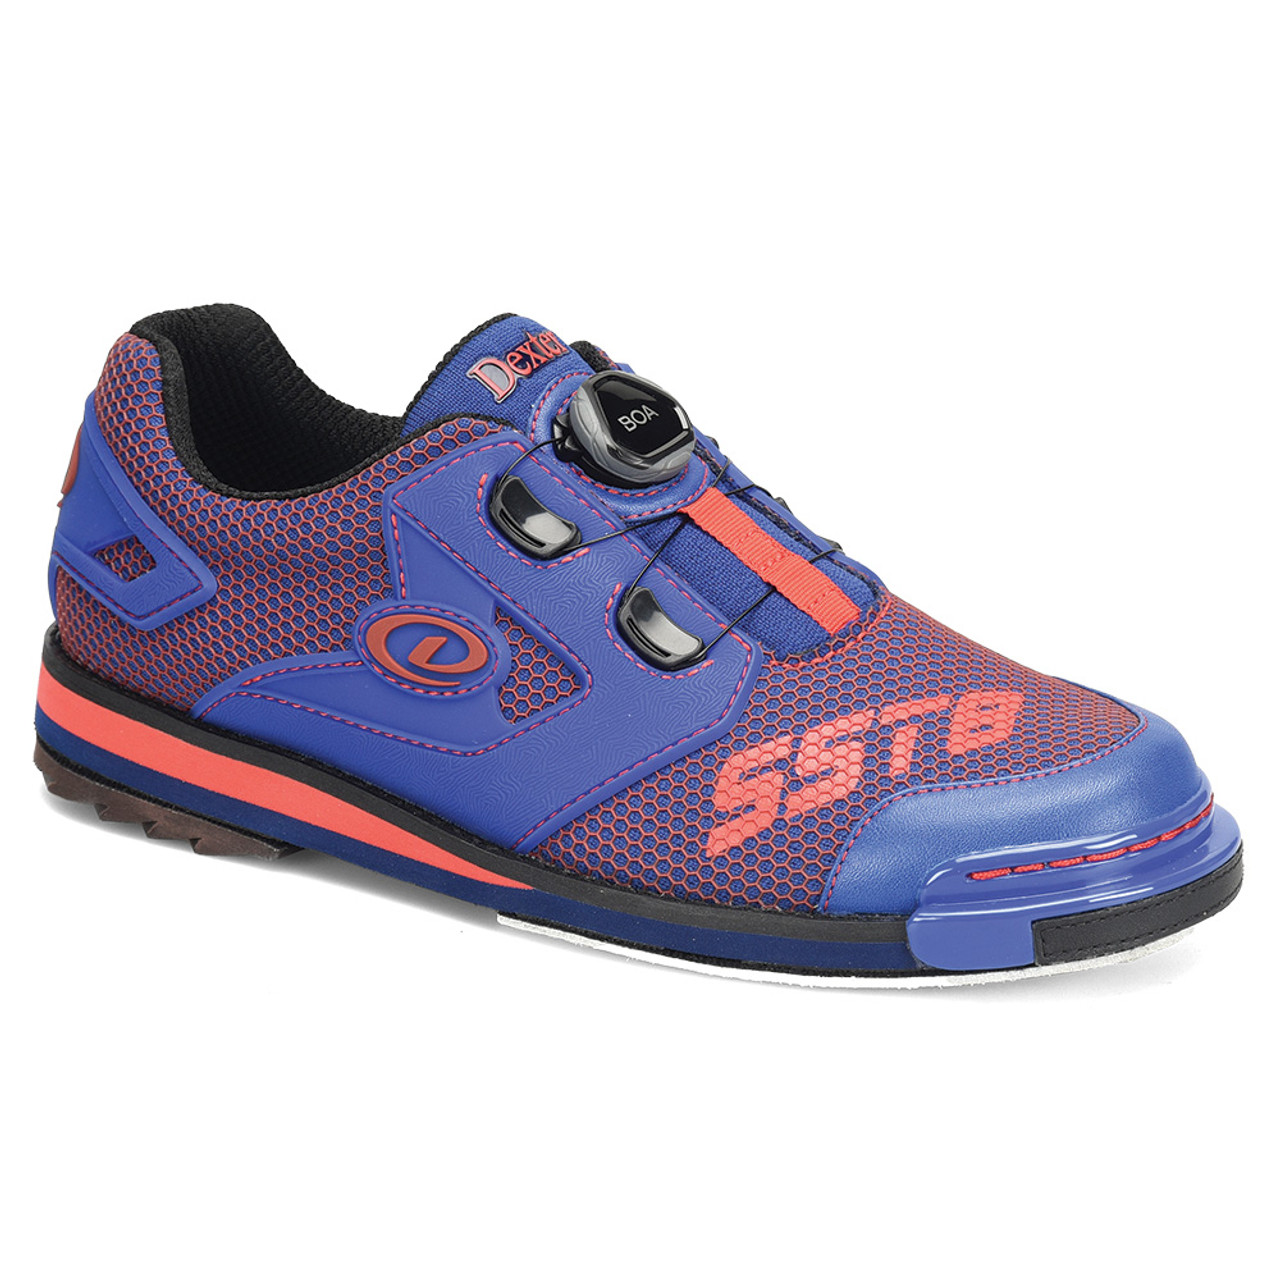 Dexter Men's SST 8 Power-Frame Boa Bowling Shoes - Blue/Red - WIDE